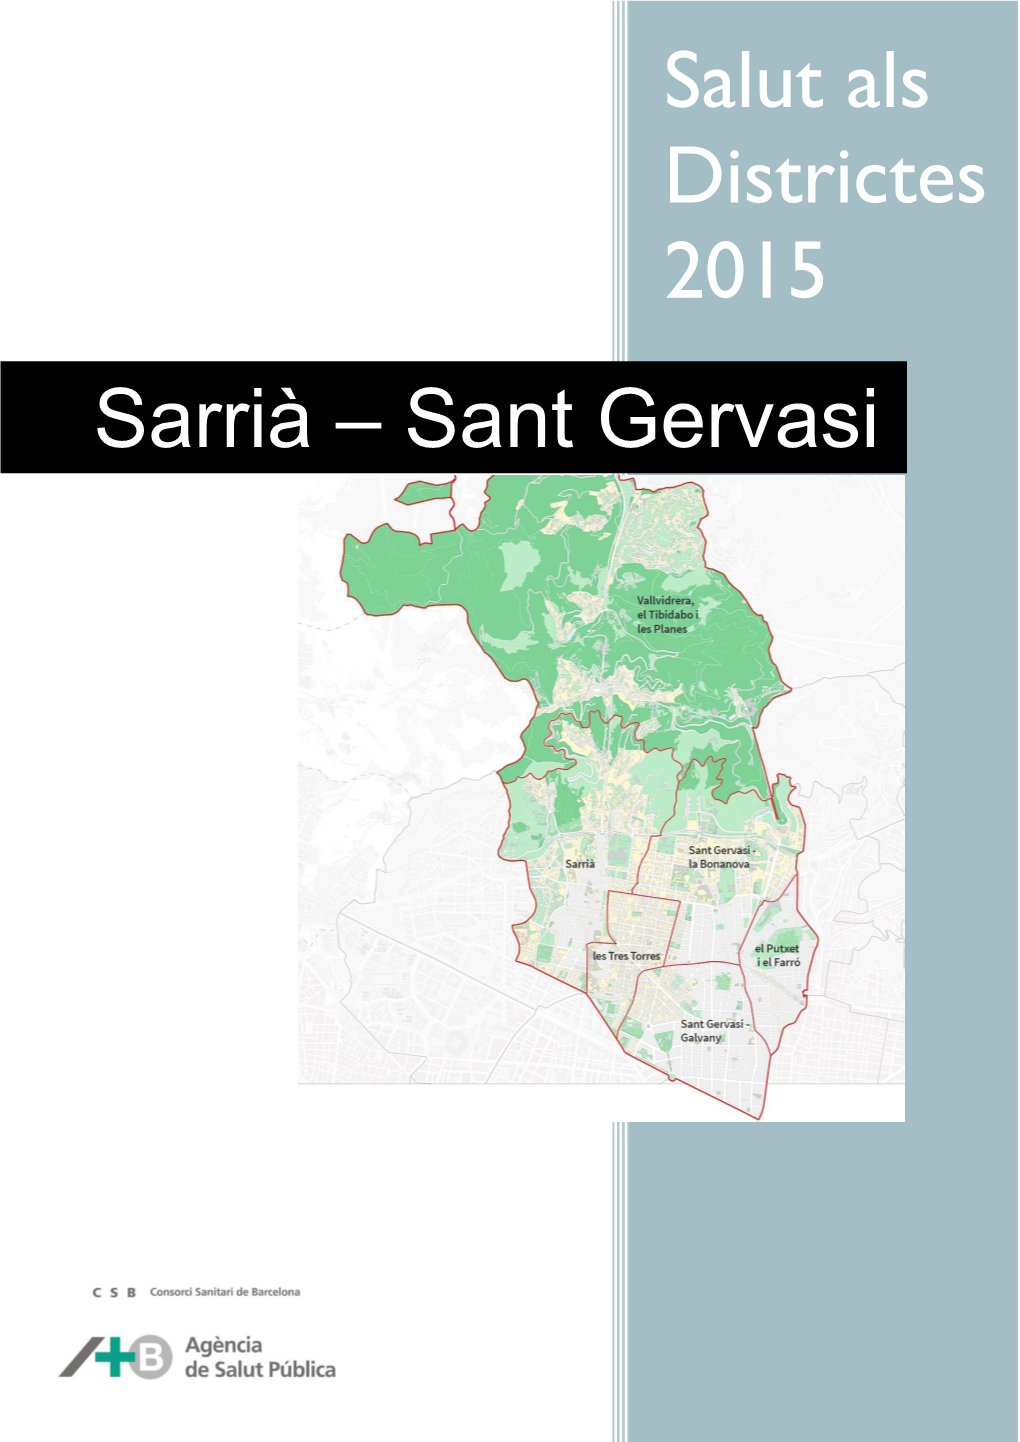 Salut Als Districtes 2015. Sarrià-Sant Gervasi